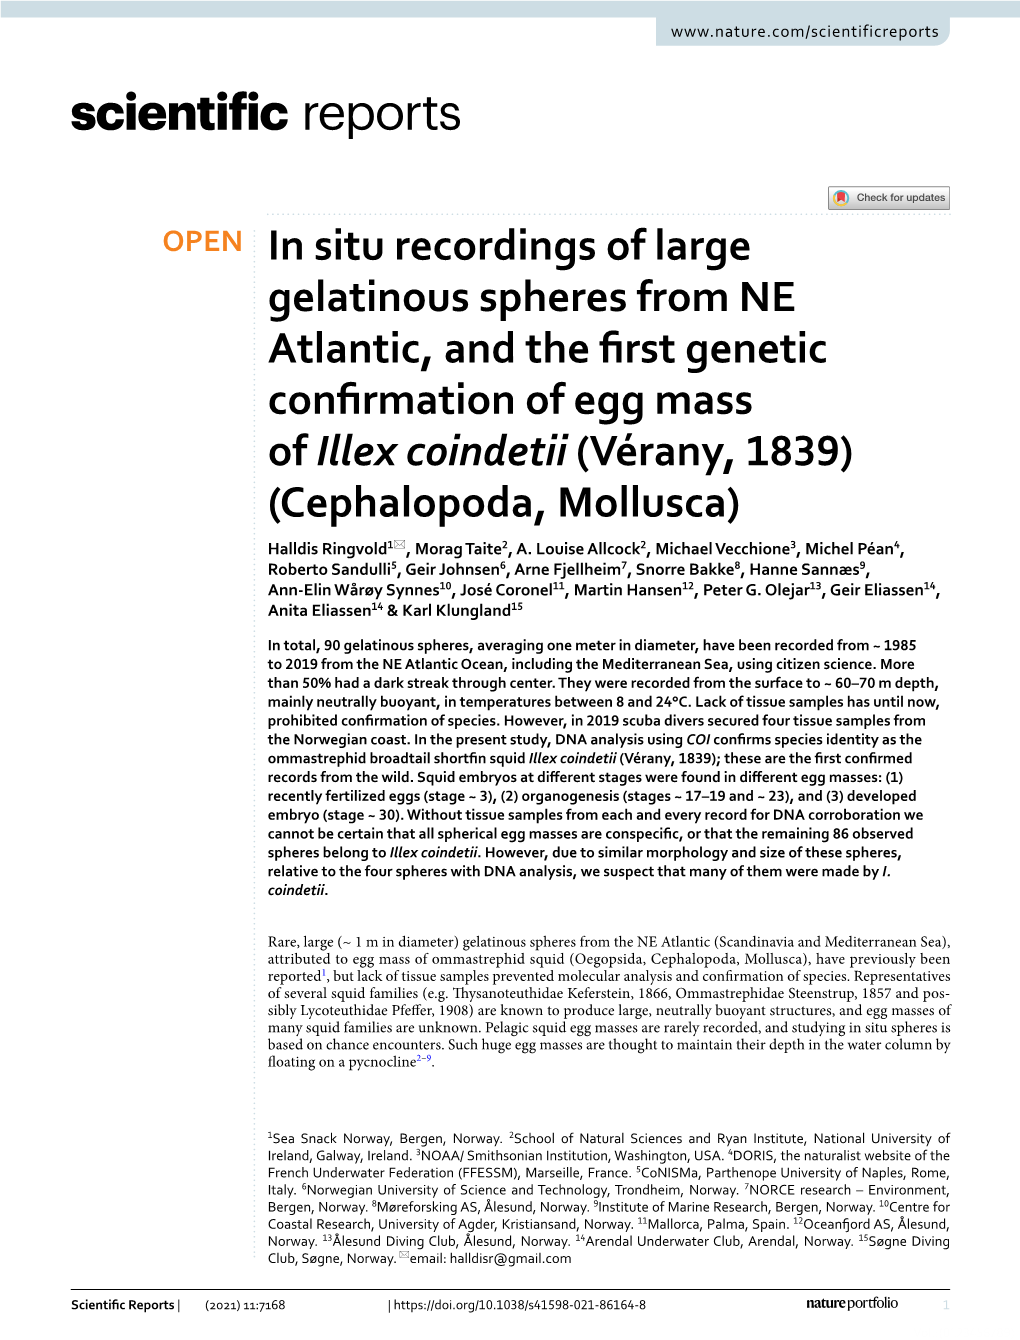 In Situ Recordings of Large Gelatinous Spheres from NE Atlantic, and The